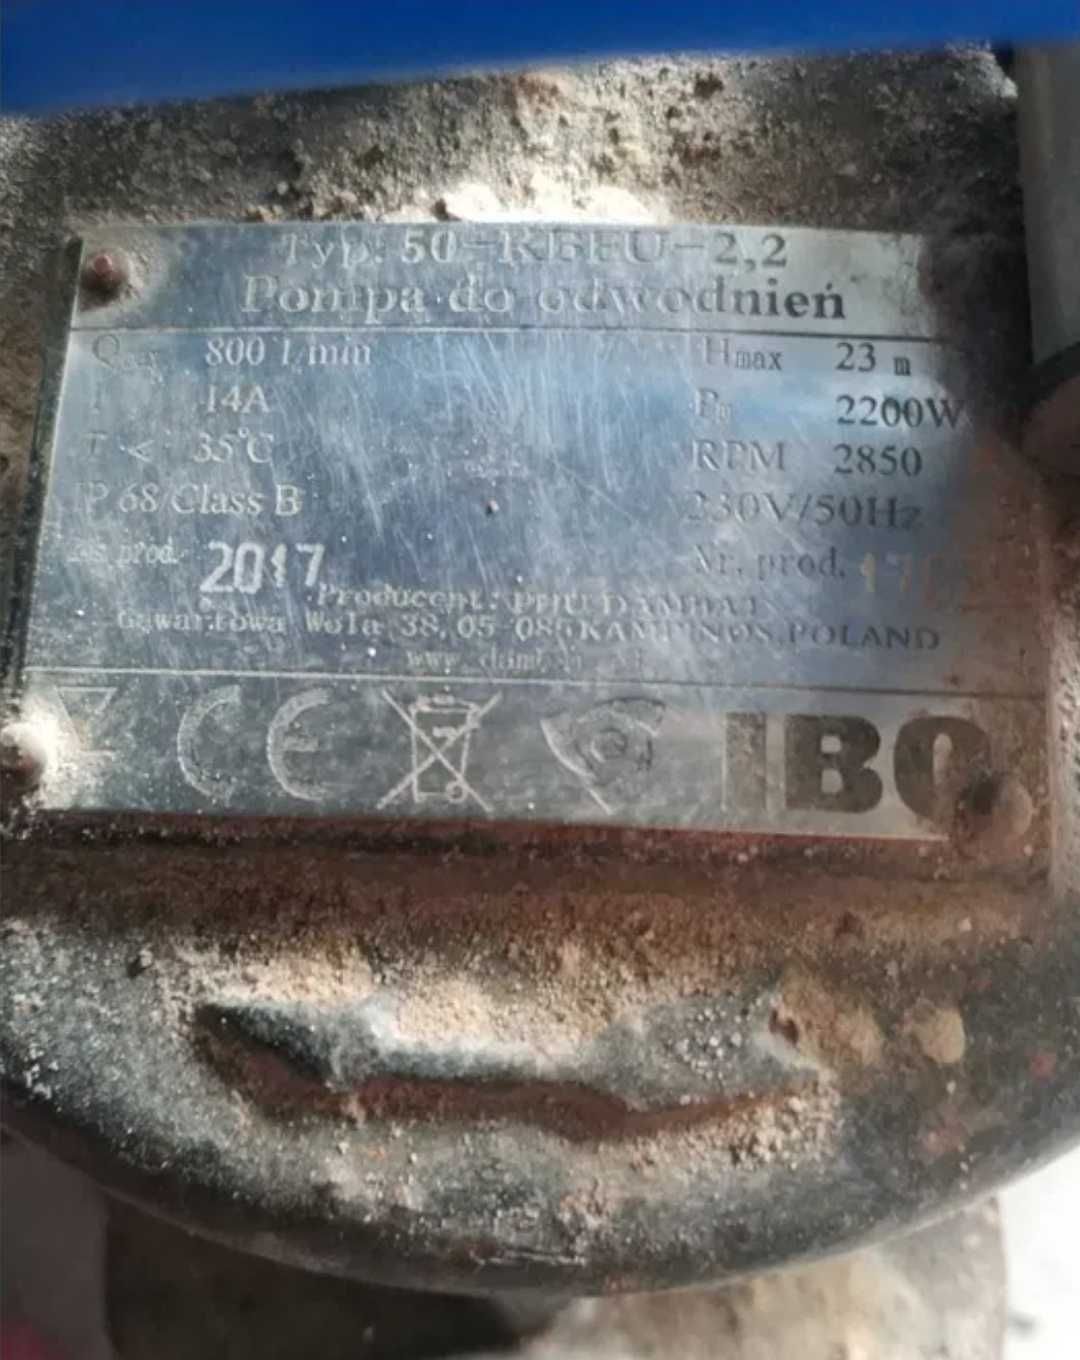 Pompa szlamowa 50-KBFU-2,2 230V IBO do odwodnień